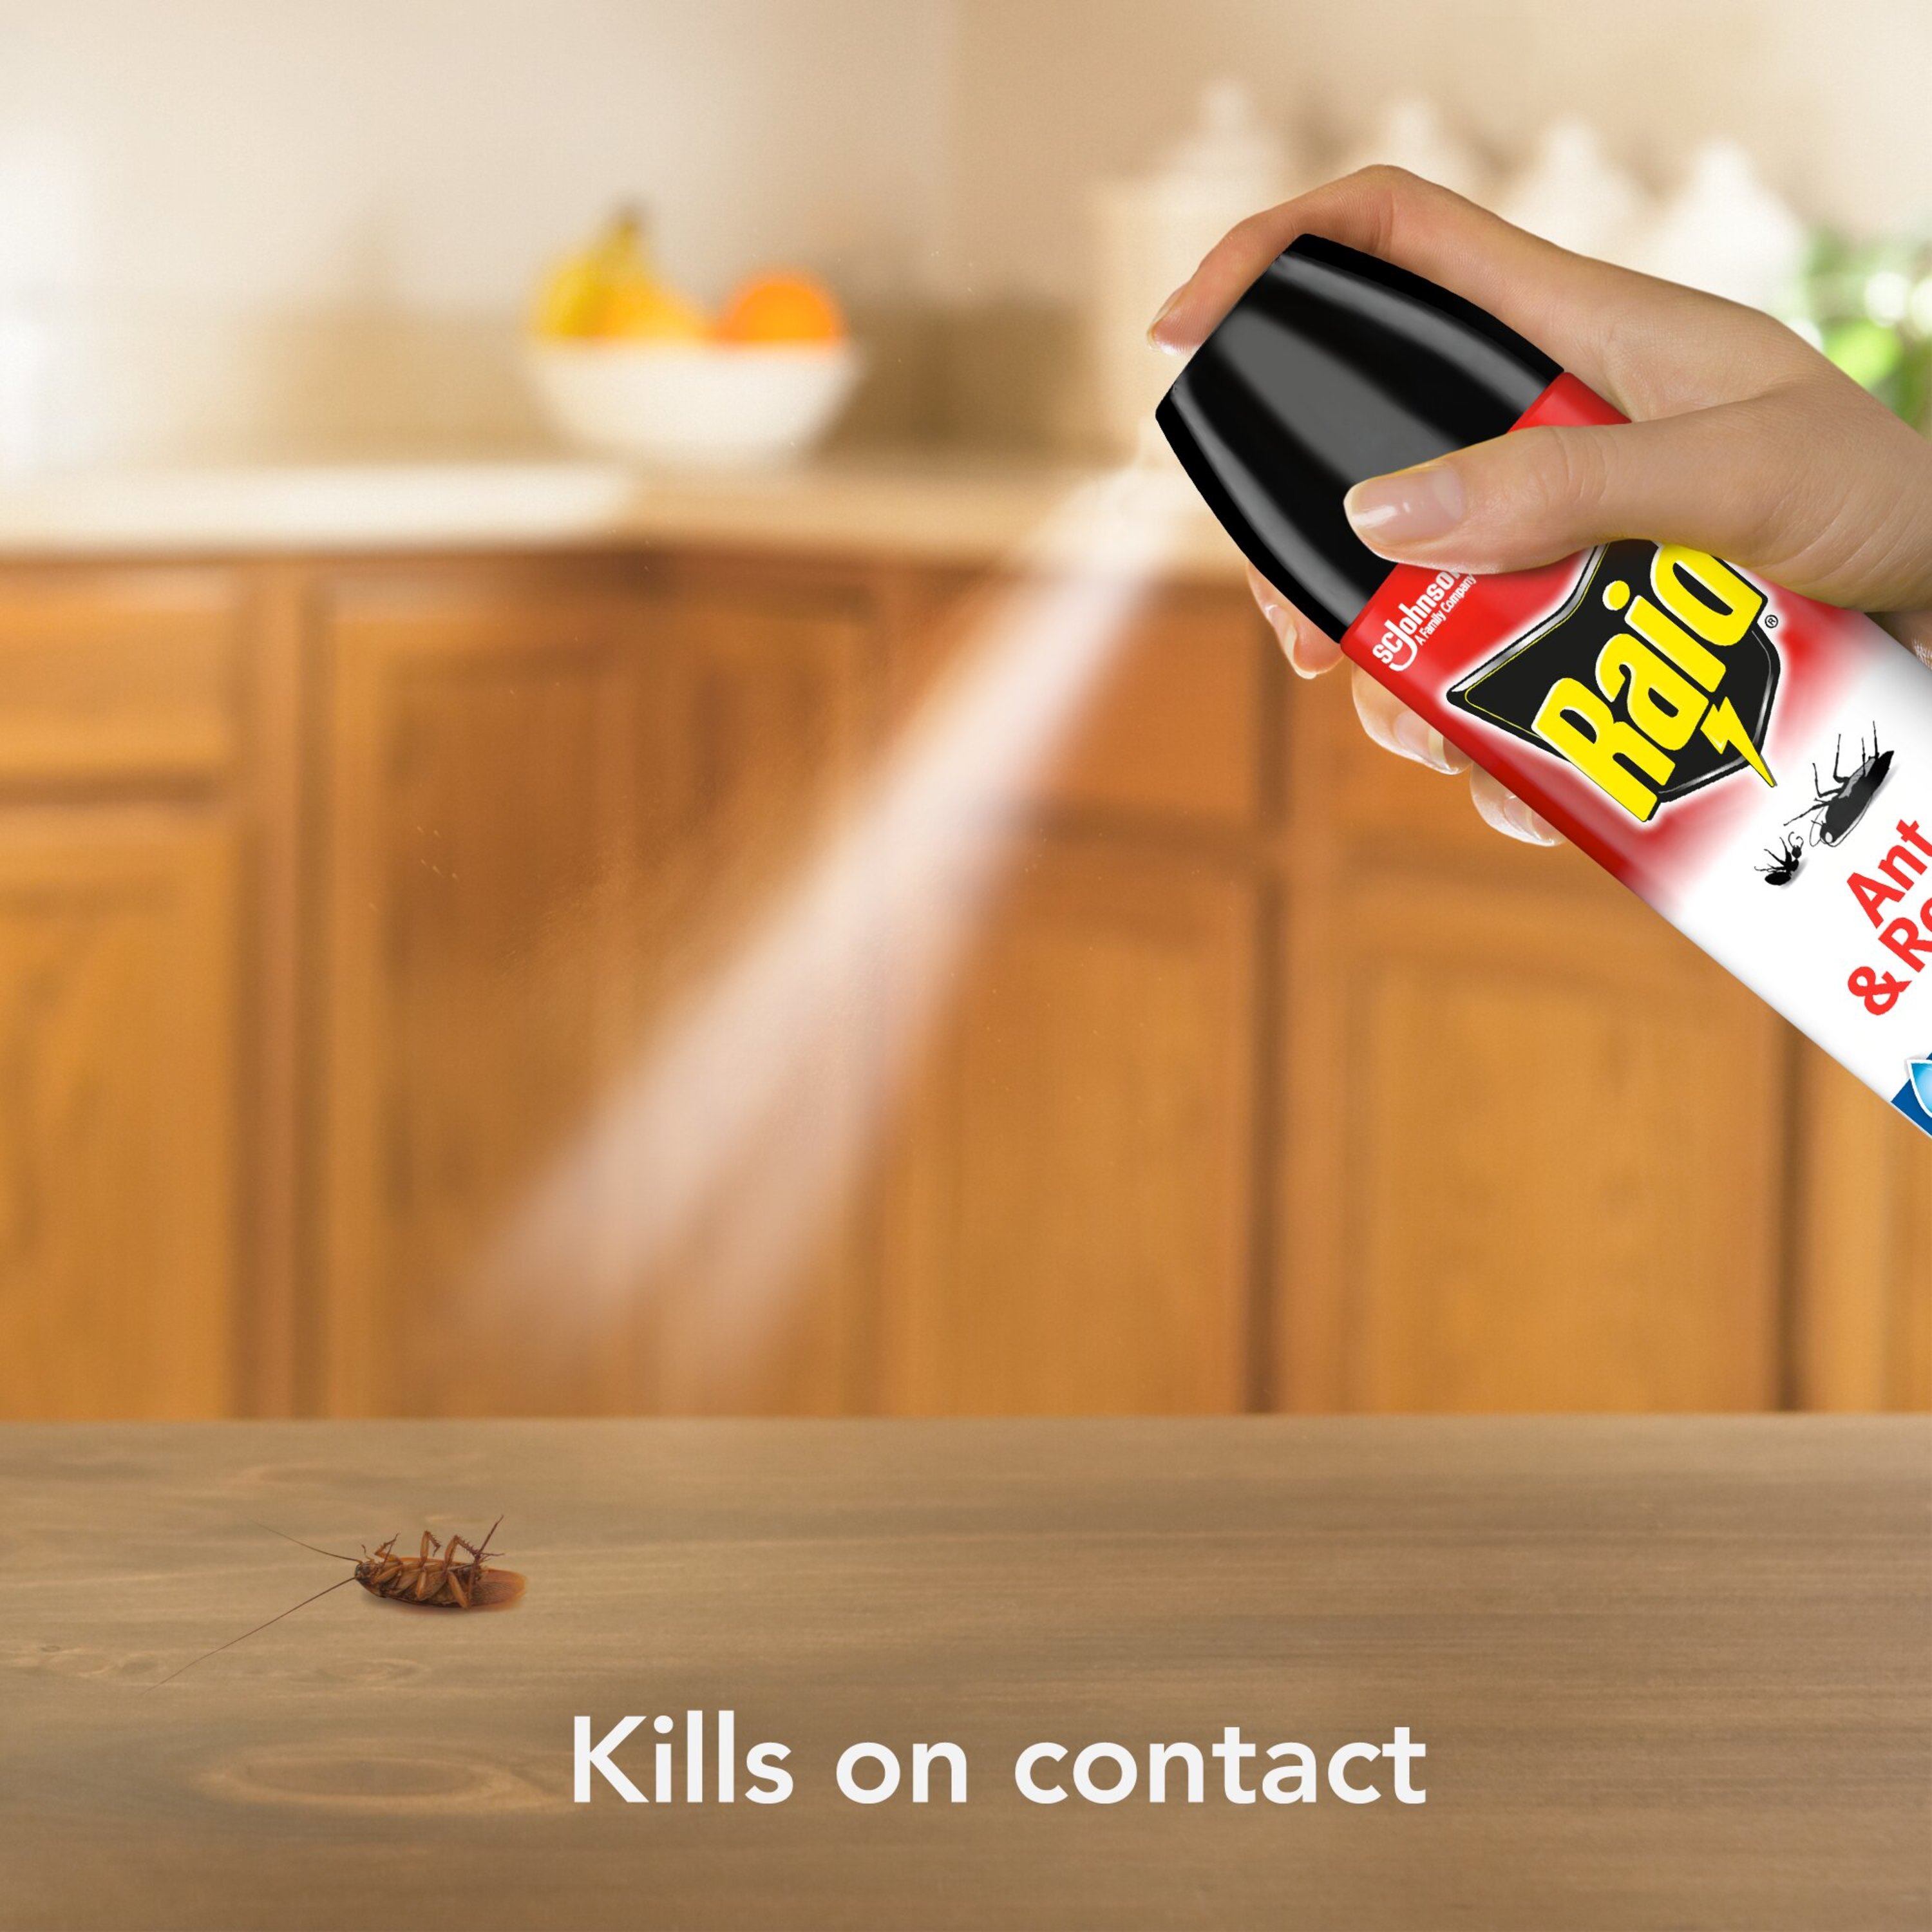 Raid® Ant & Roach Aerosol Bug Spray, Water-Based, Non-Greasy Insecticide, 17.5 fl oz - image 3 of 14